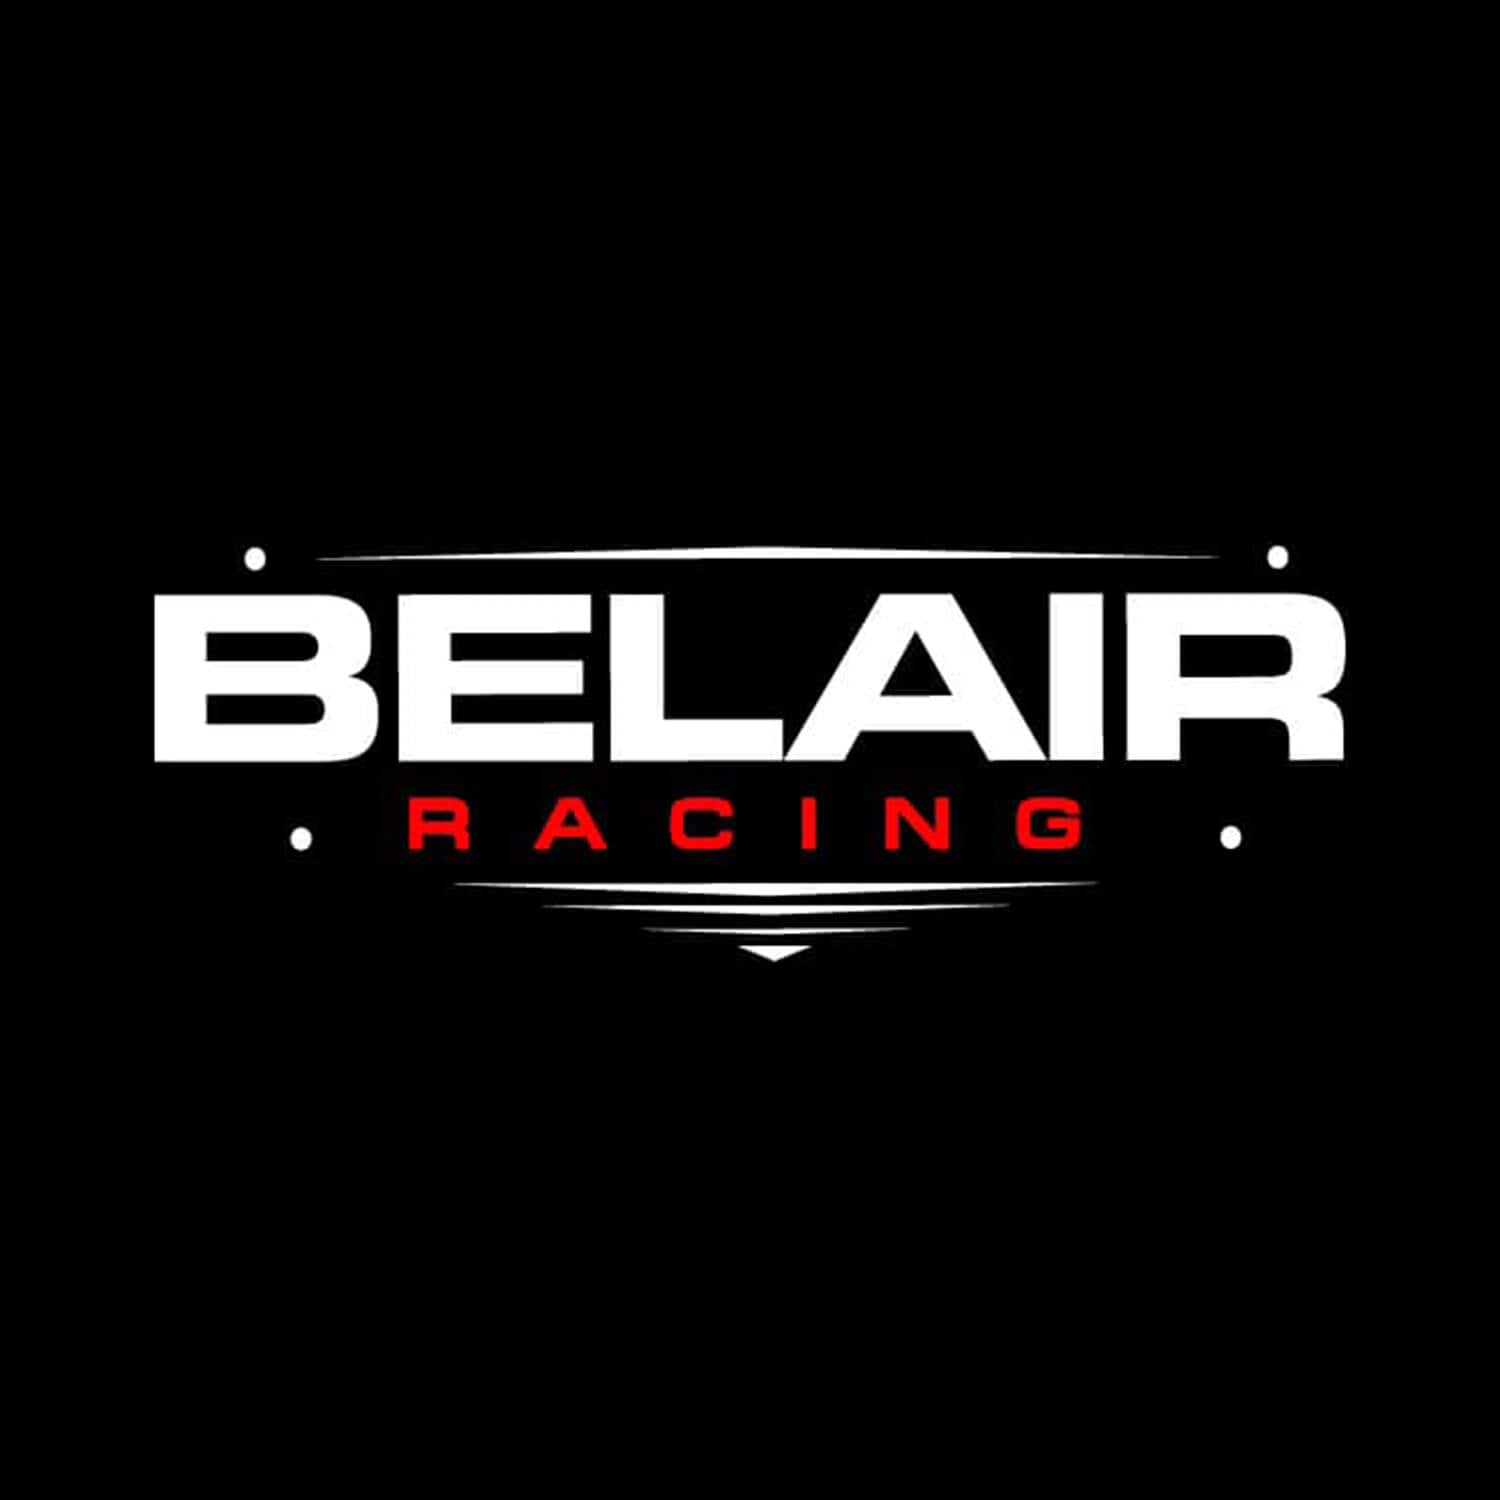 Belair Racing logo on black background